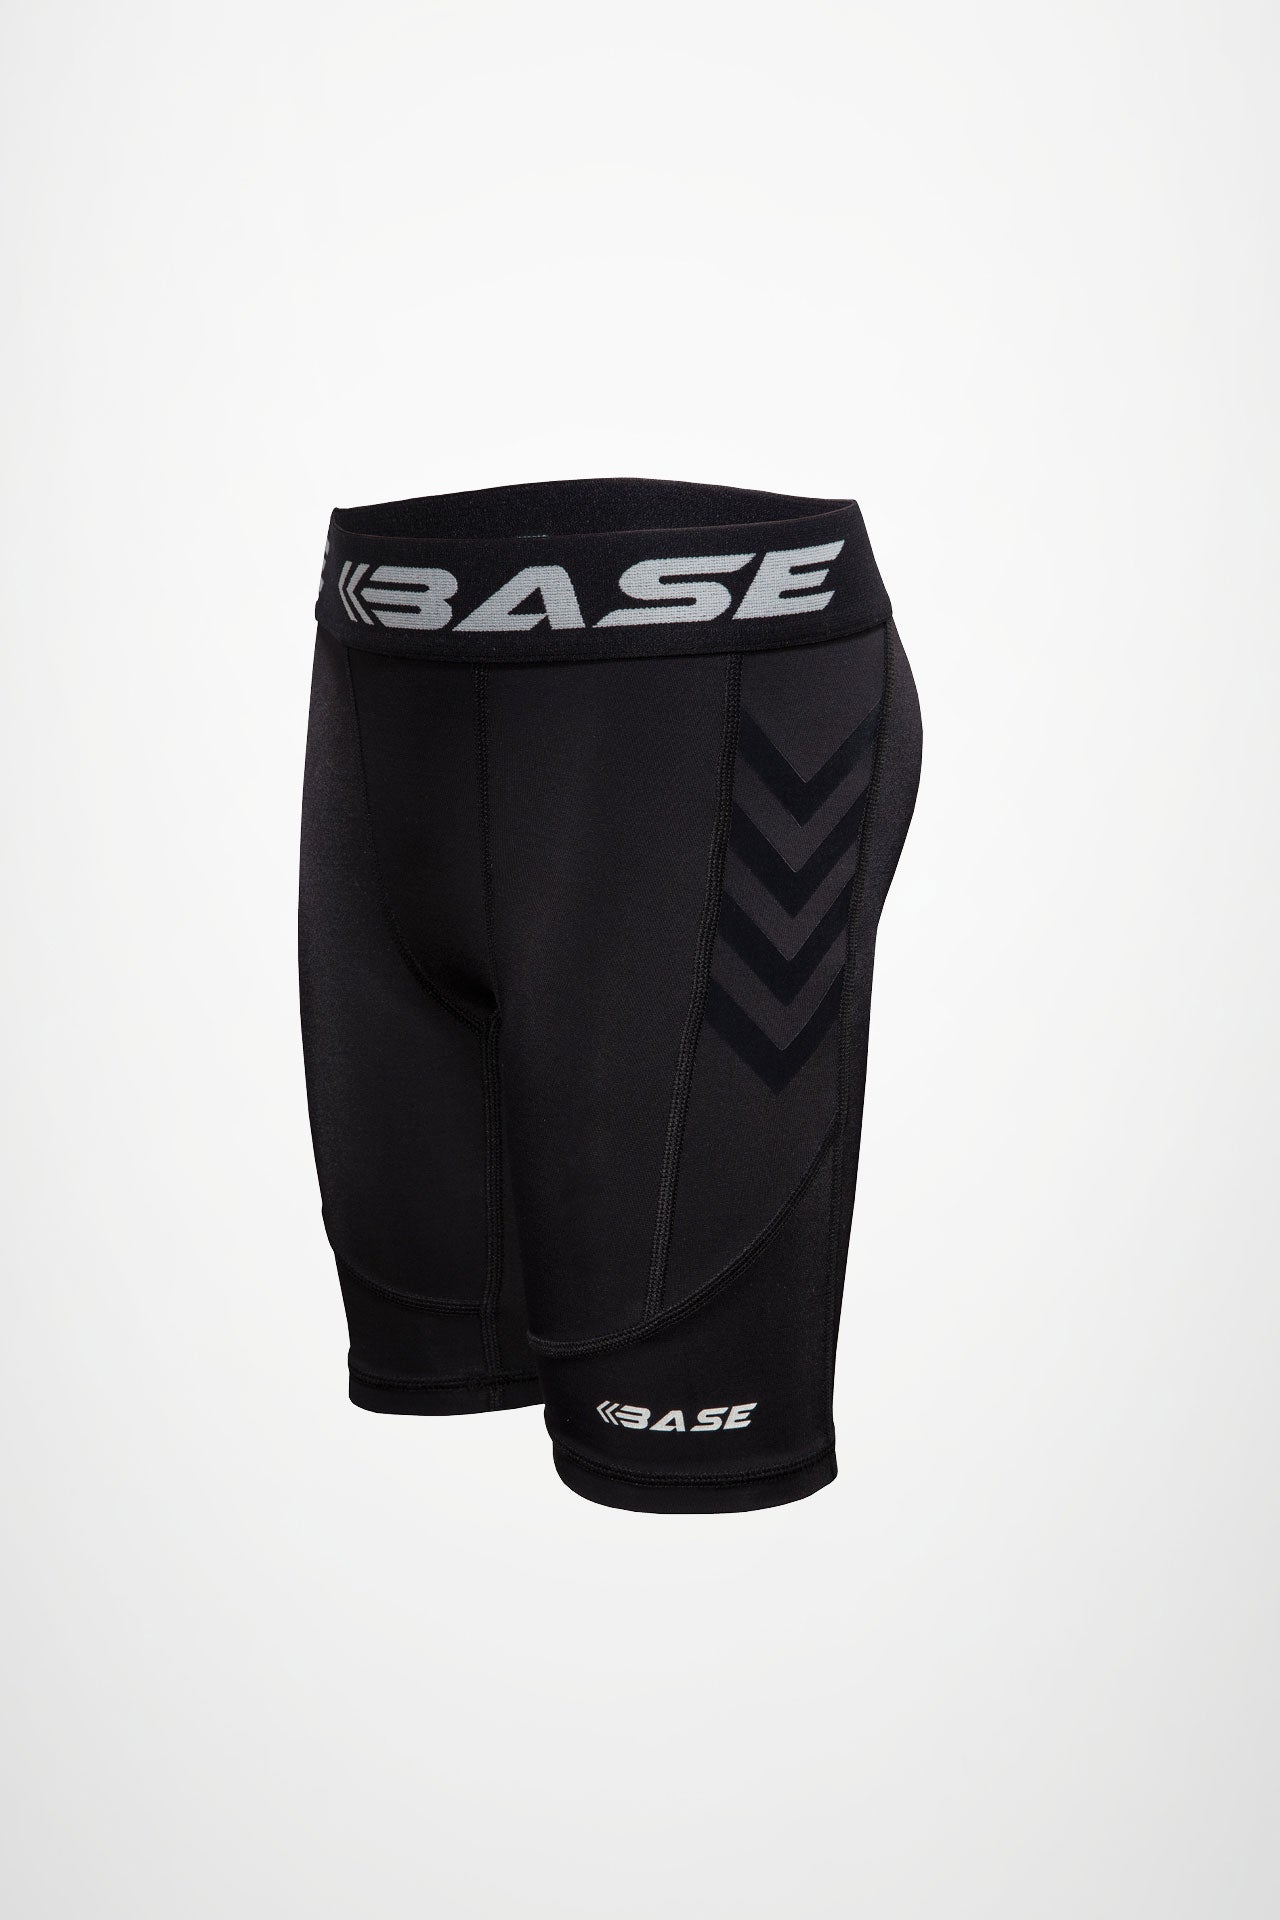 BASE Youth Compression Shorts - Black